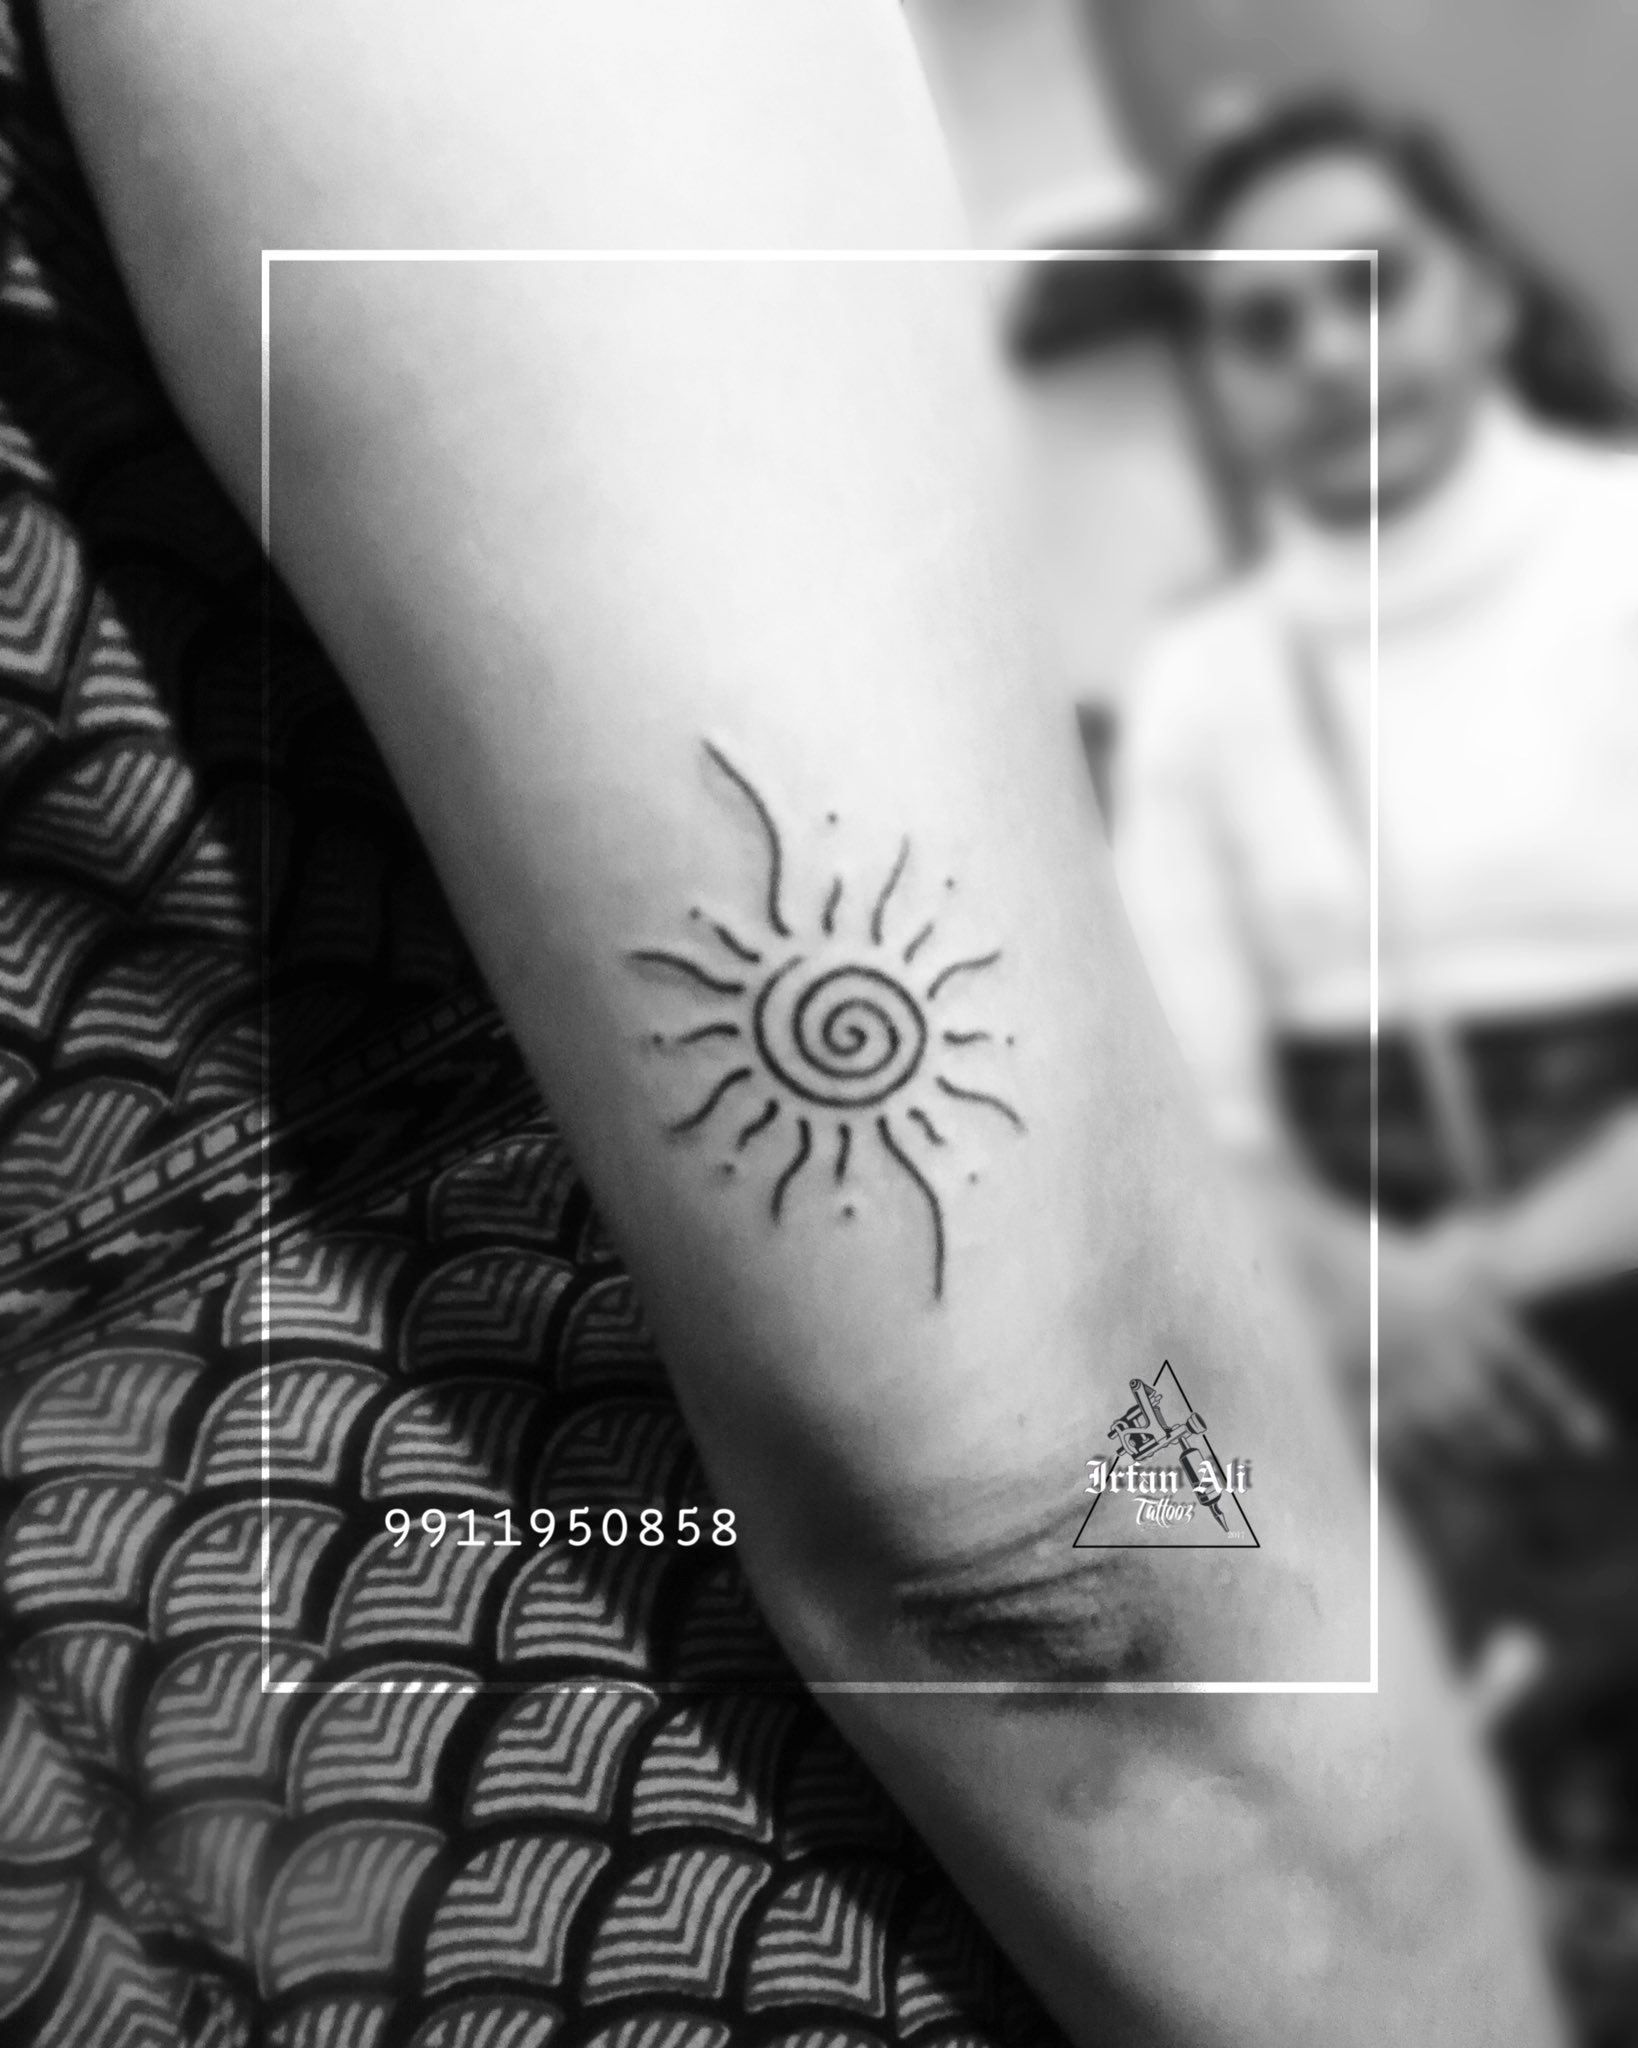 Tribal Suns Temporary Tattoos | eBay